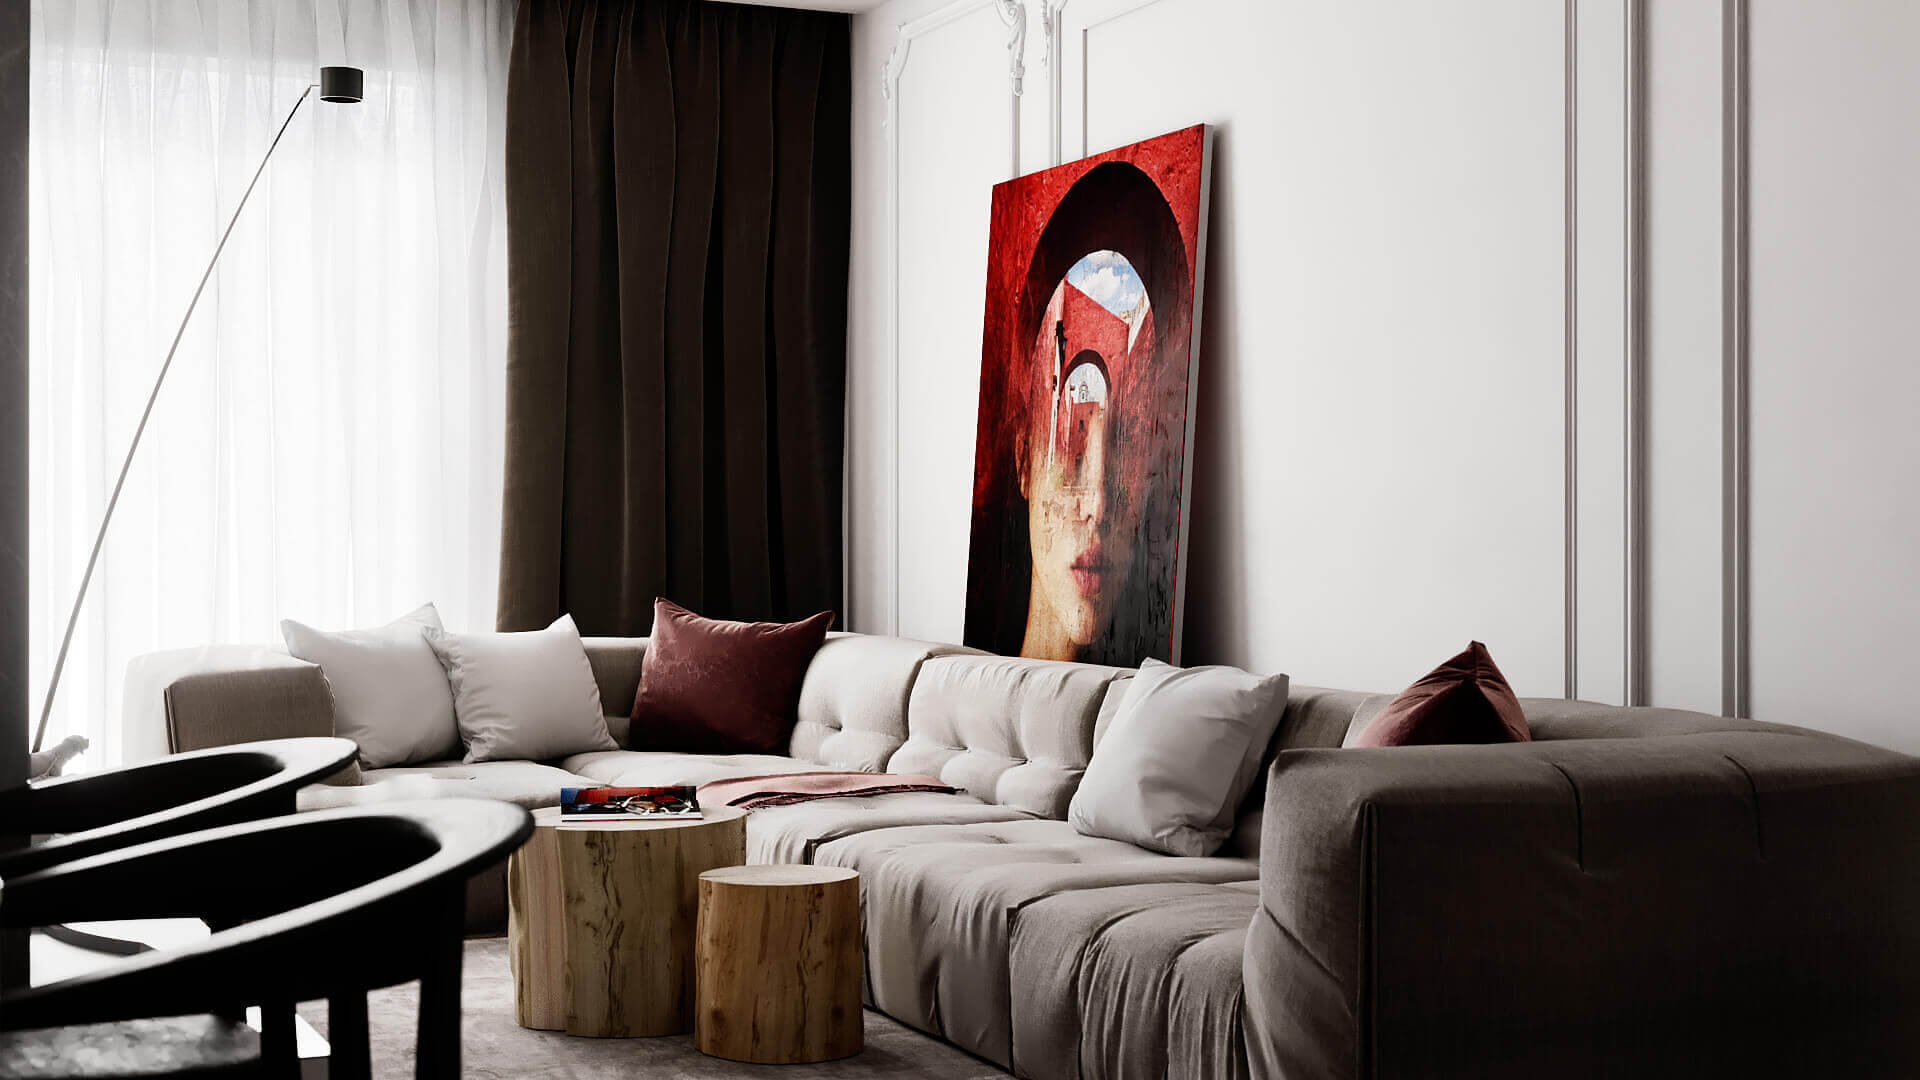 Bernardazzi Apartment living room couch - cgi visualization